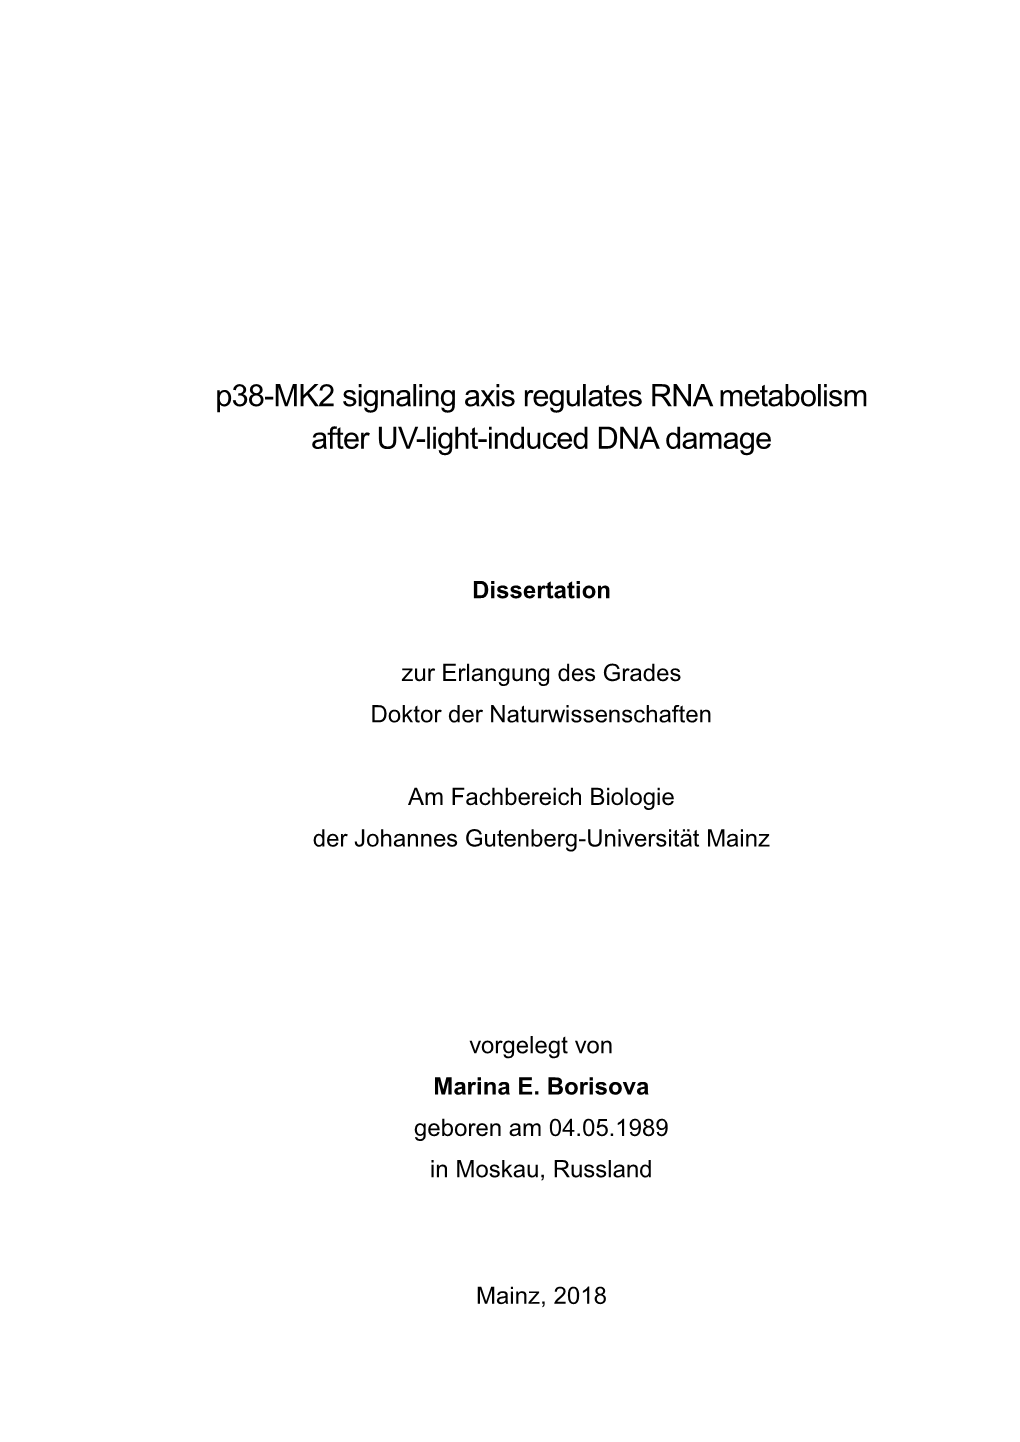 P38-MK2 Signaling Axis Regulates RNA Metabolism After UV-Light-Induced DNA Damage